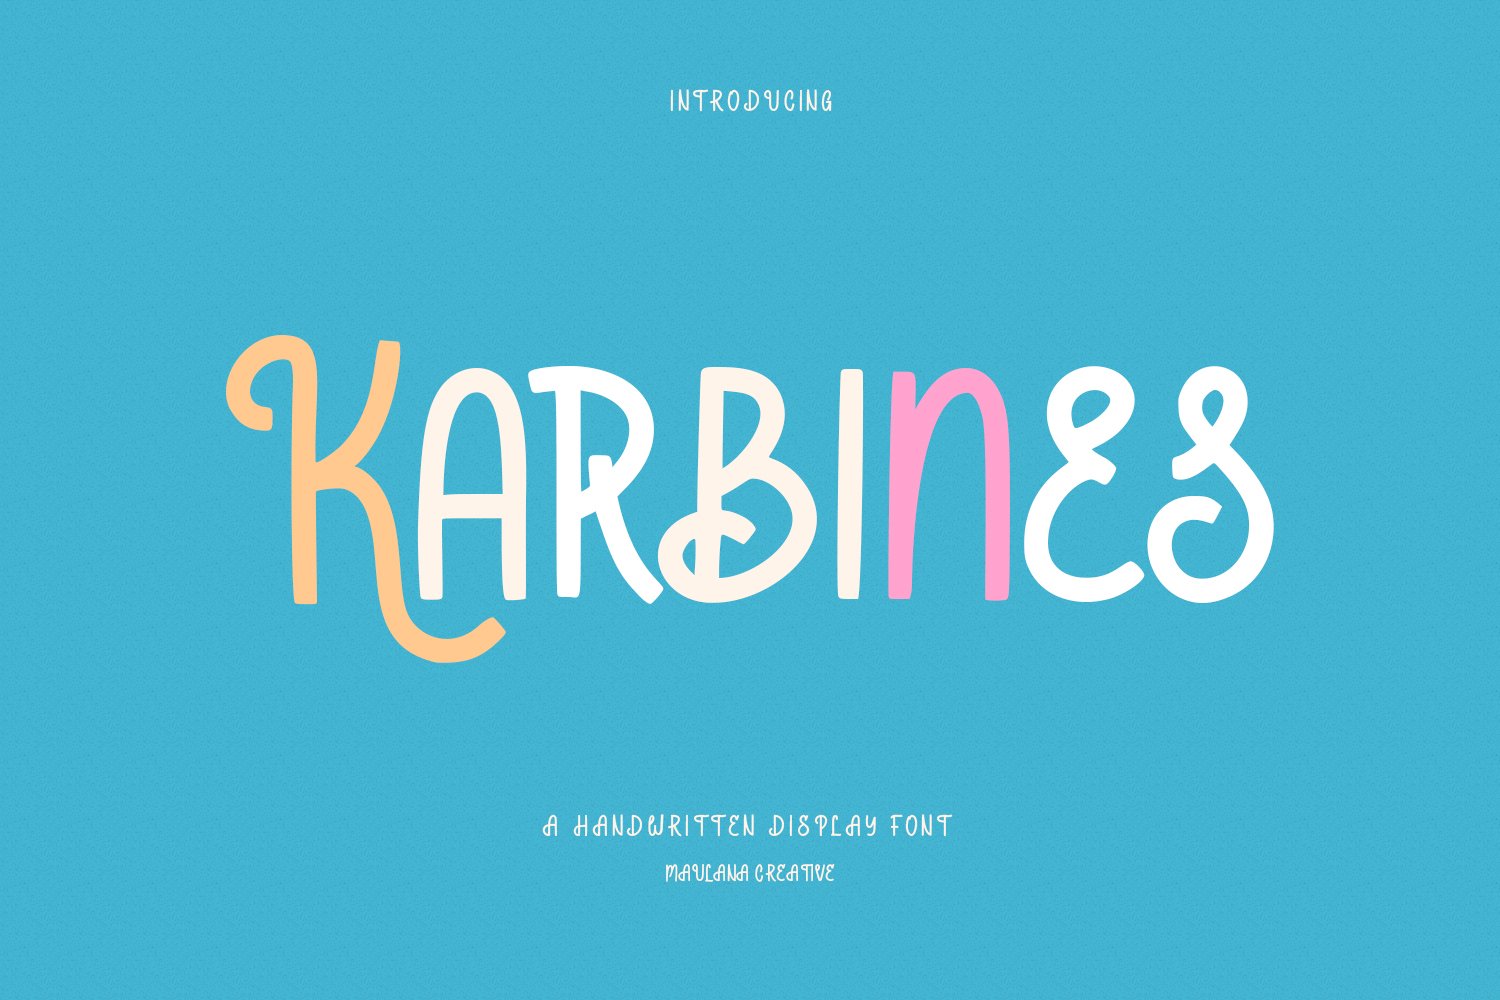 Karbines Handwritten Display Font cover image.